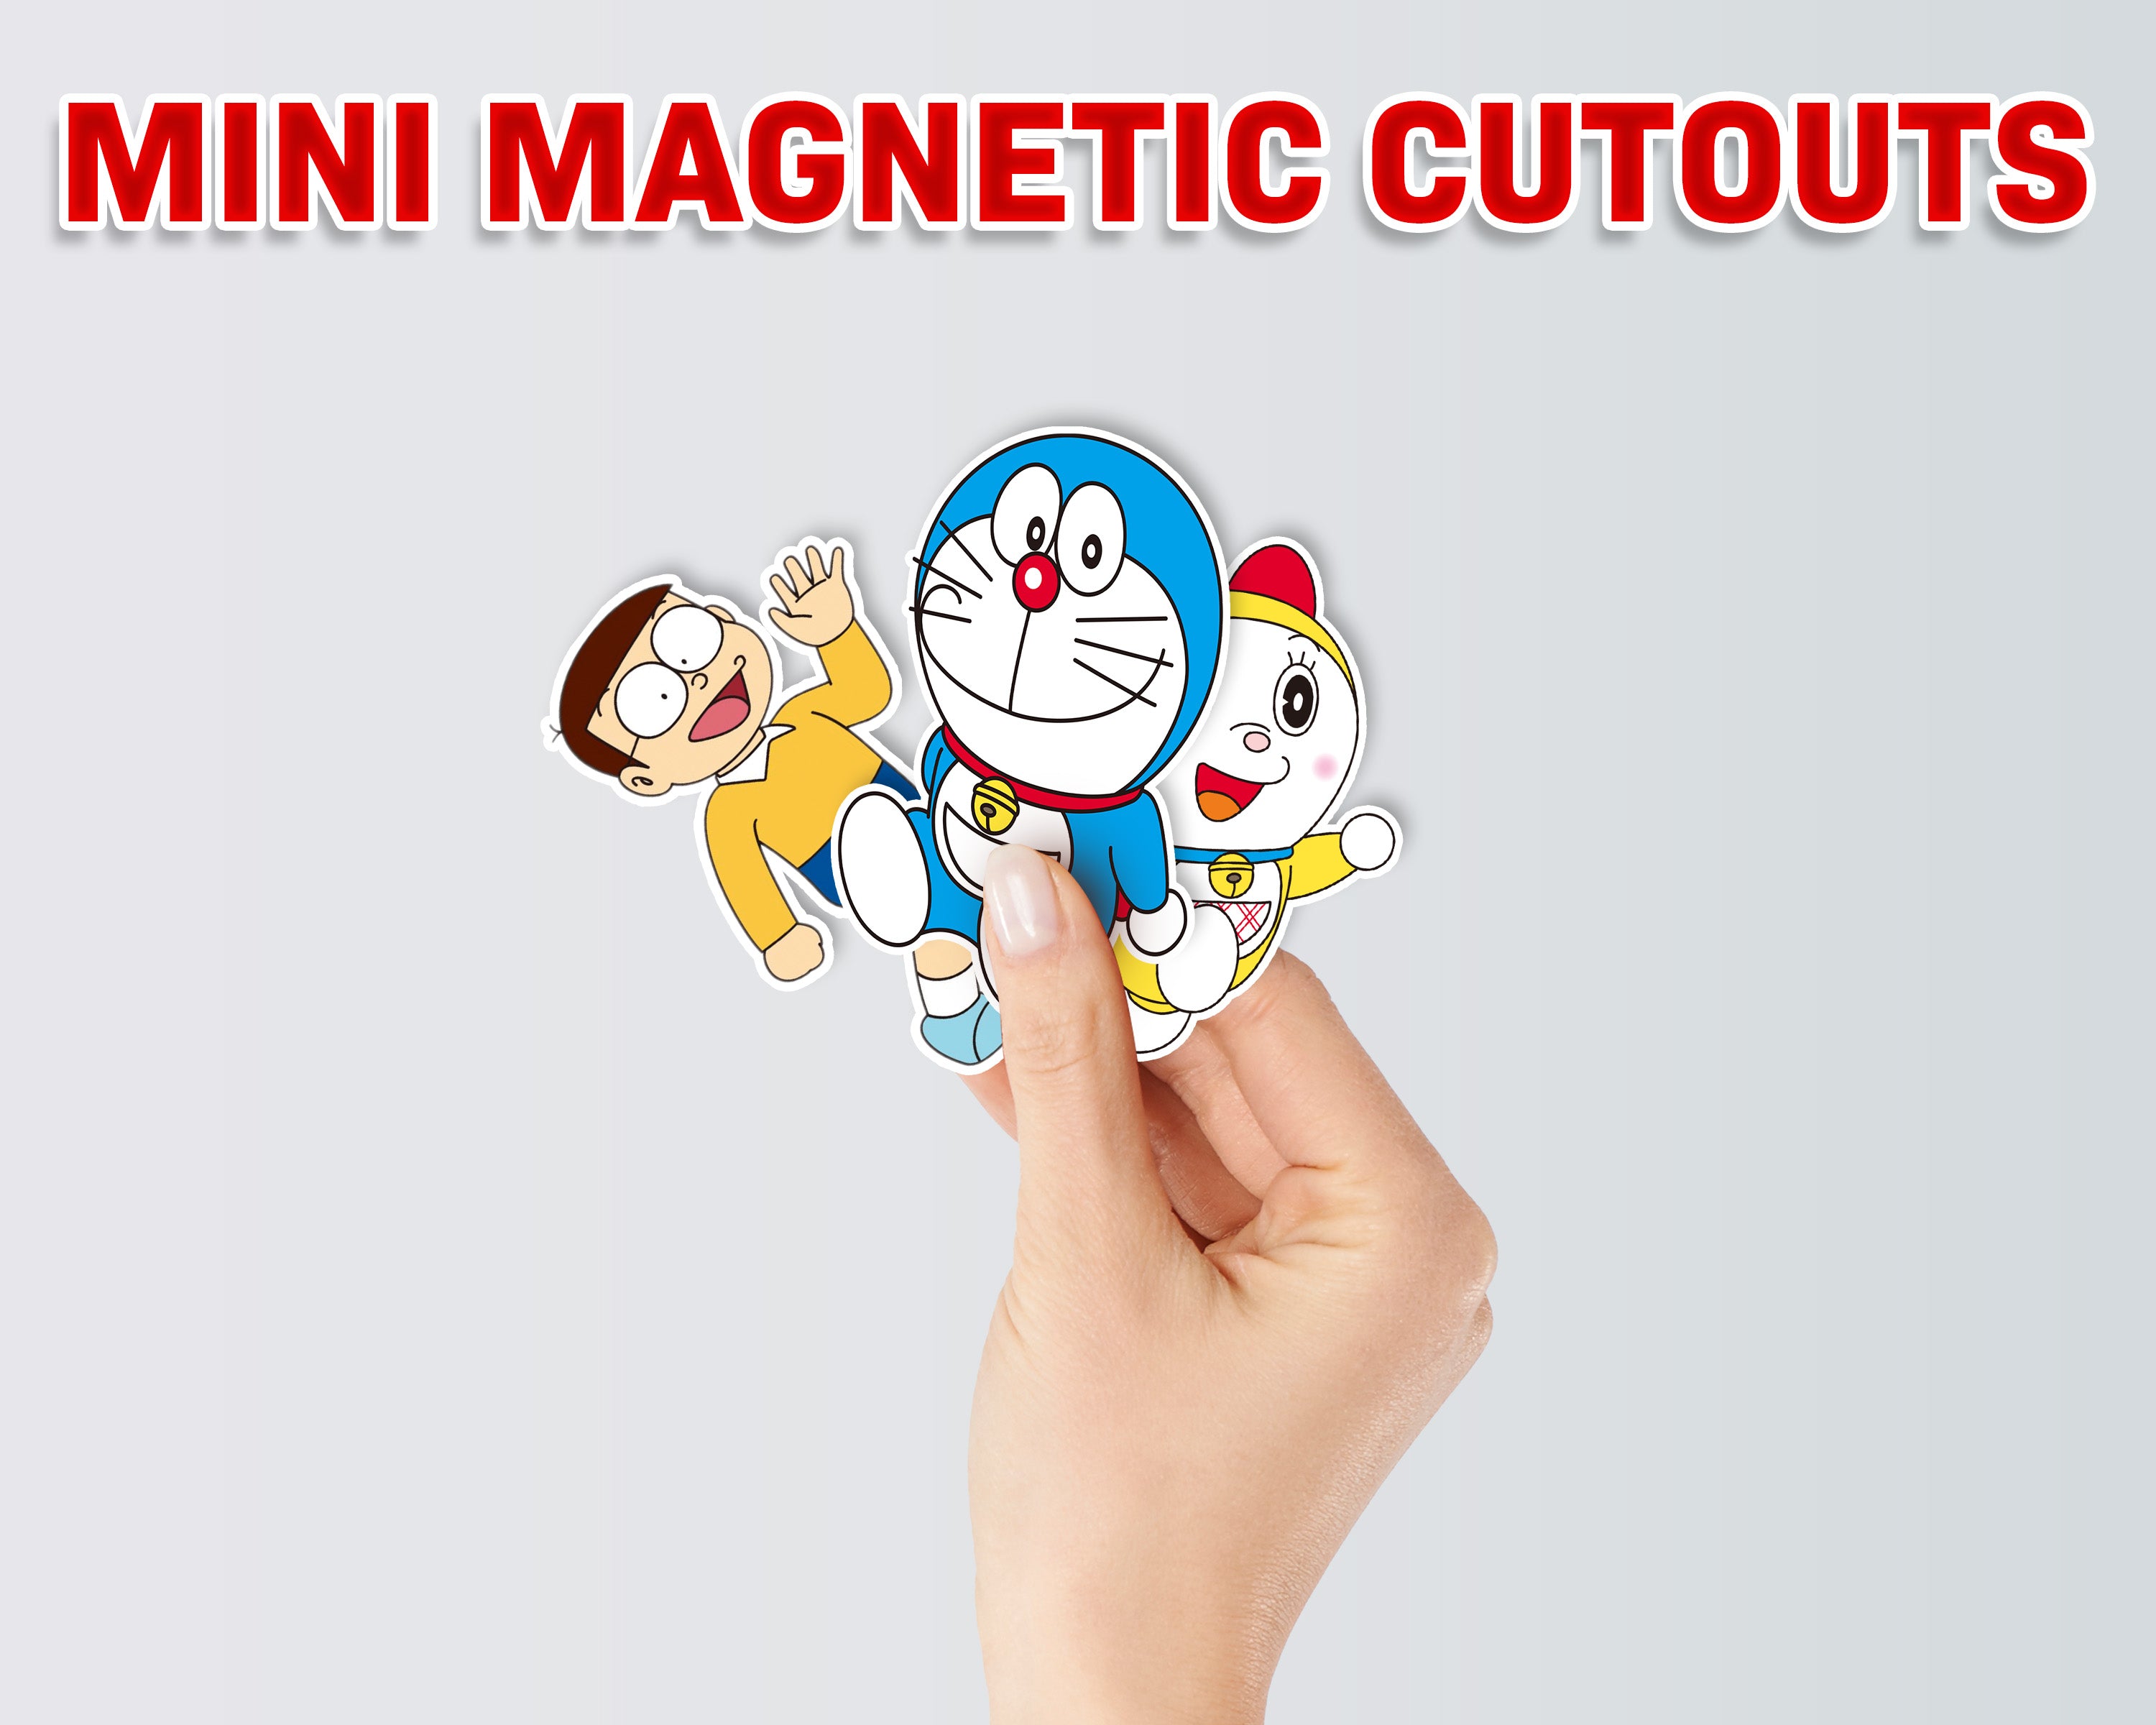 PSI Doremon Theme Mini Magnetic Return Gift Pack